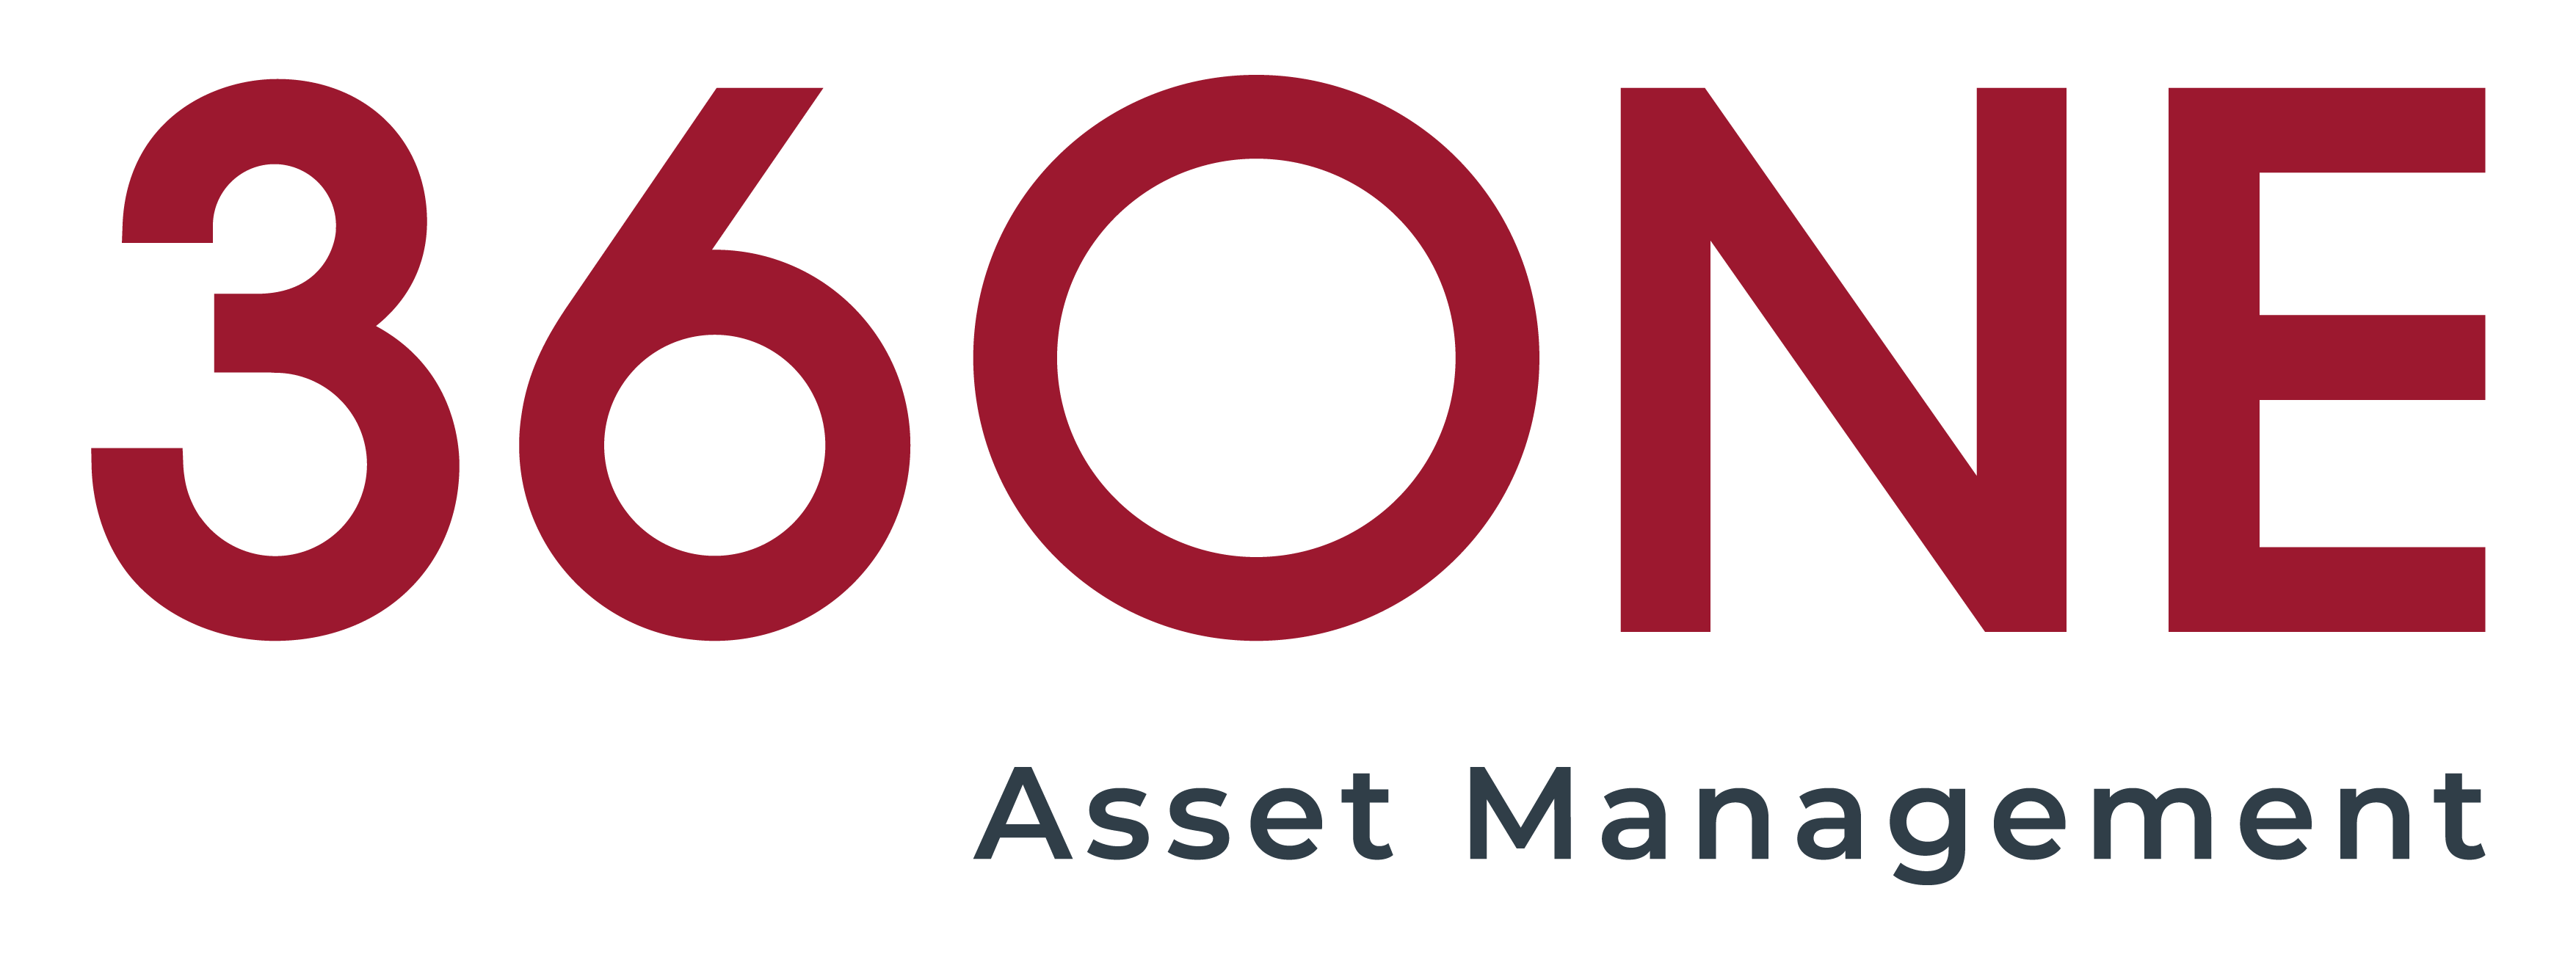 36ONE Asset Management